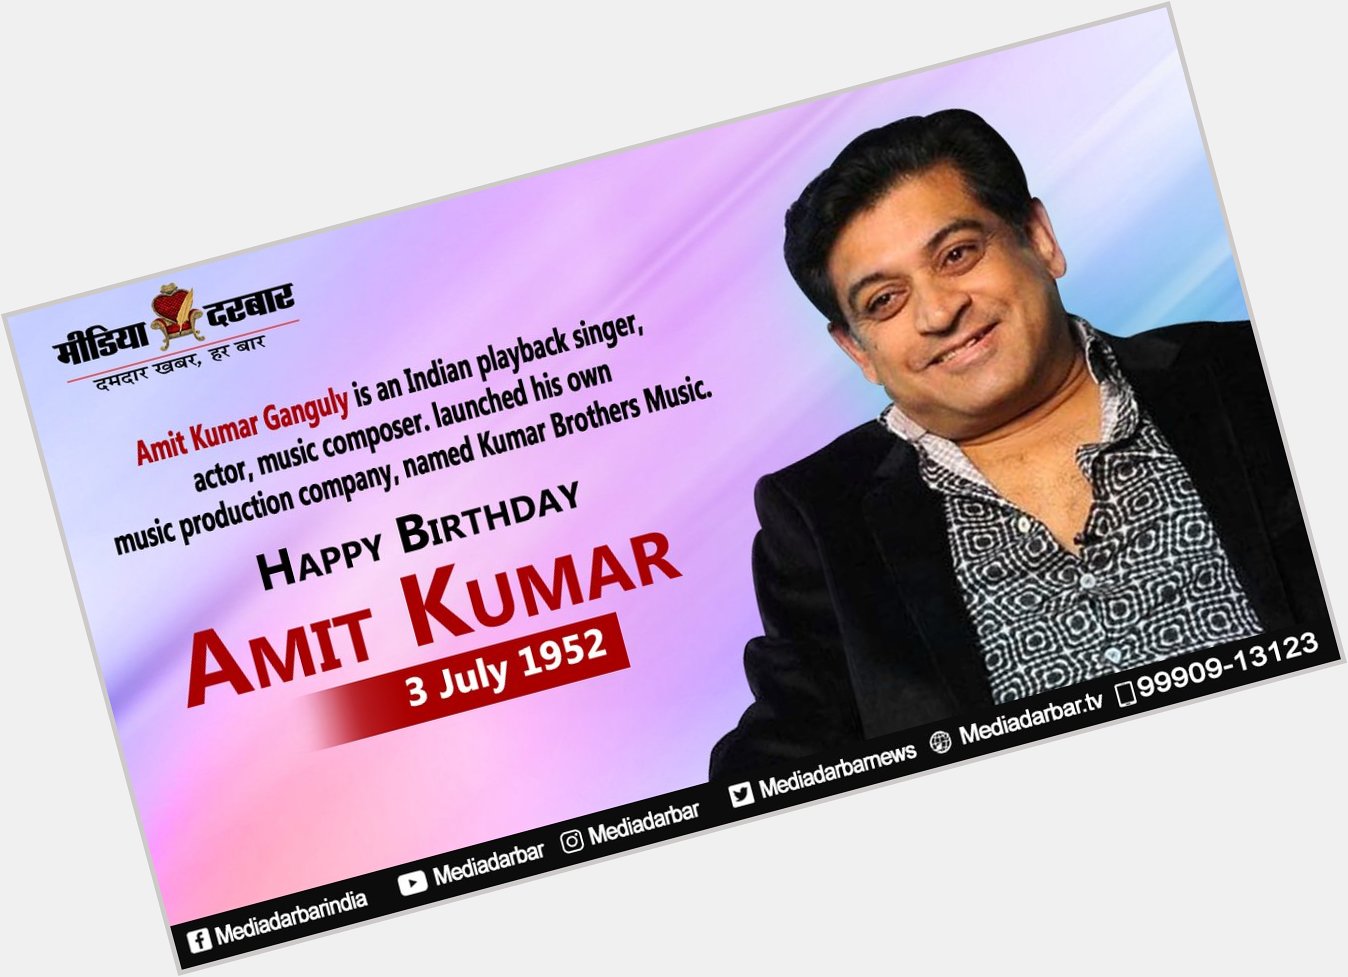 Wishing Happy Birthday To Amit Kumar   